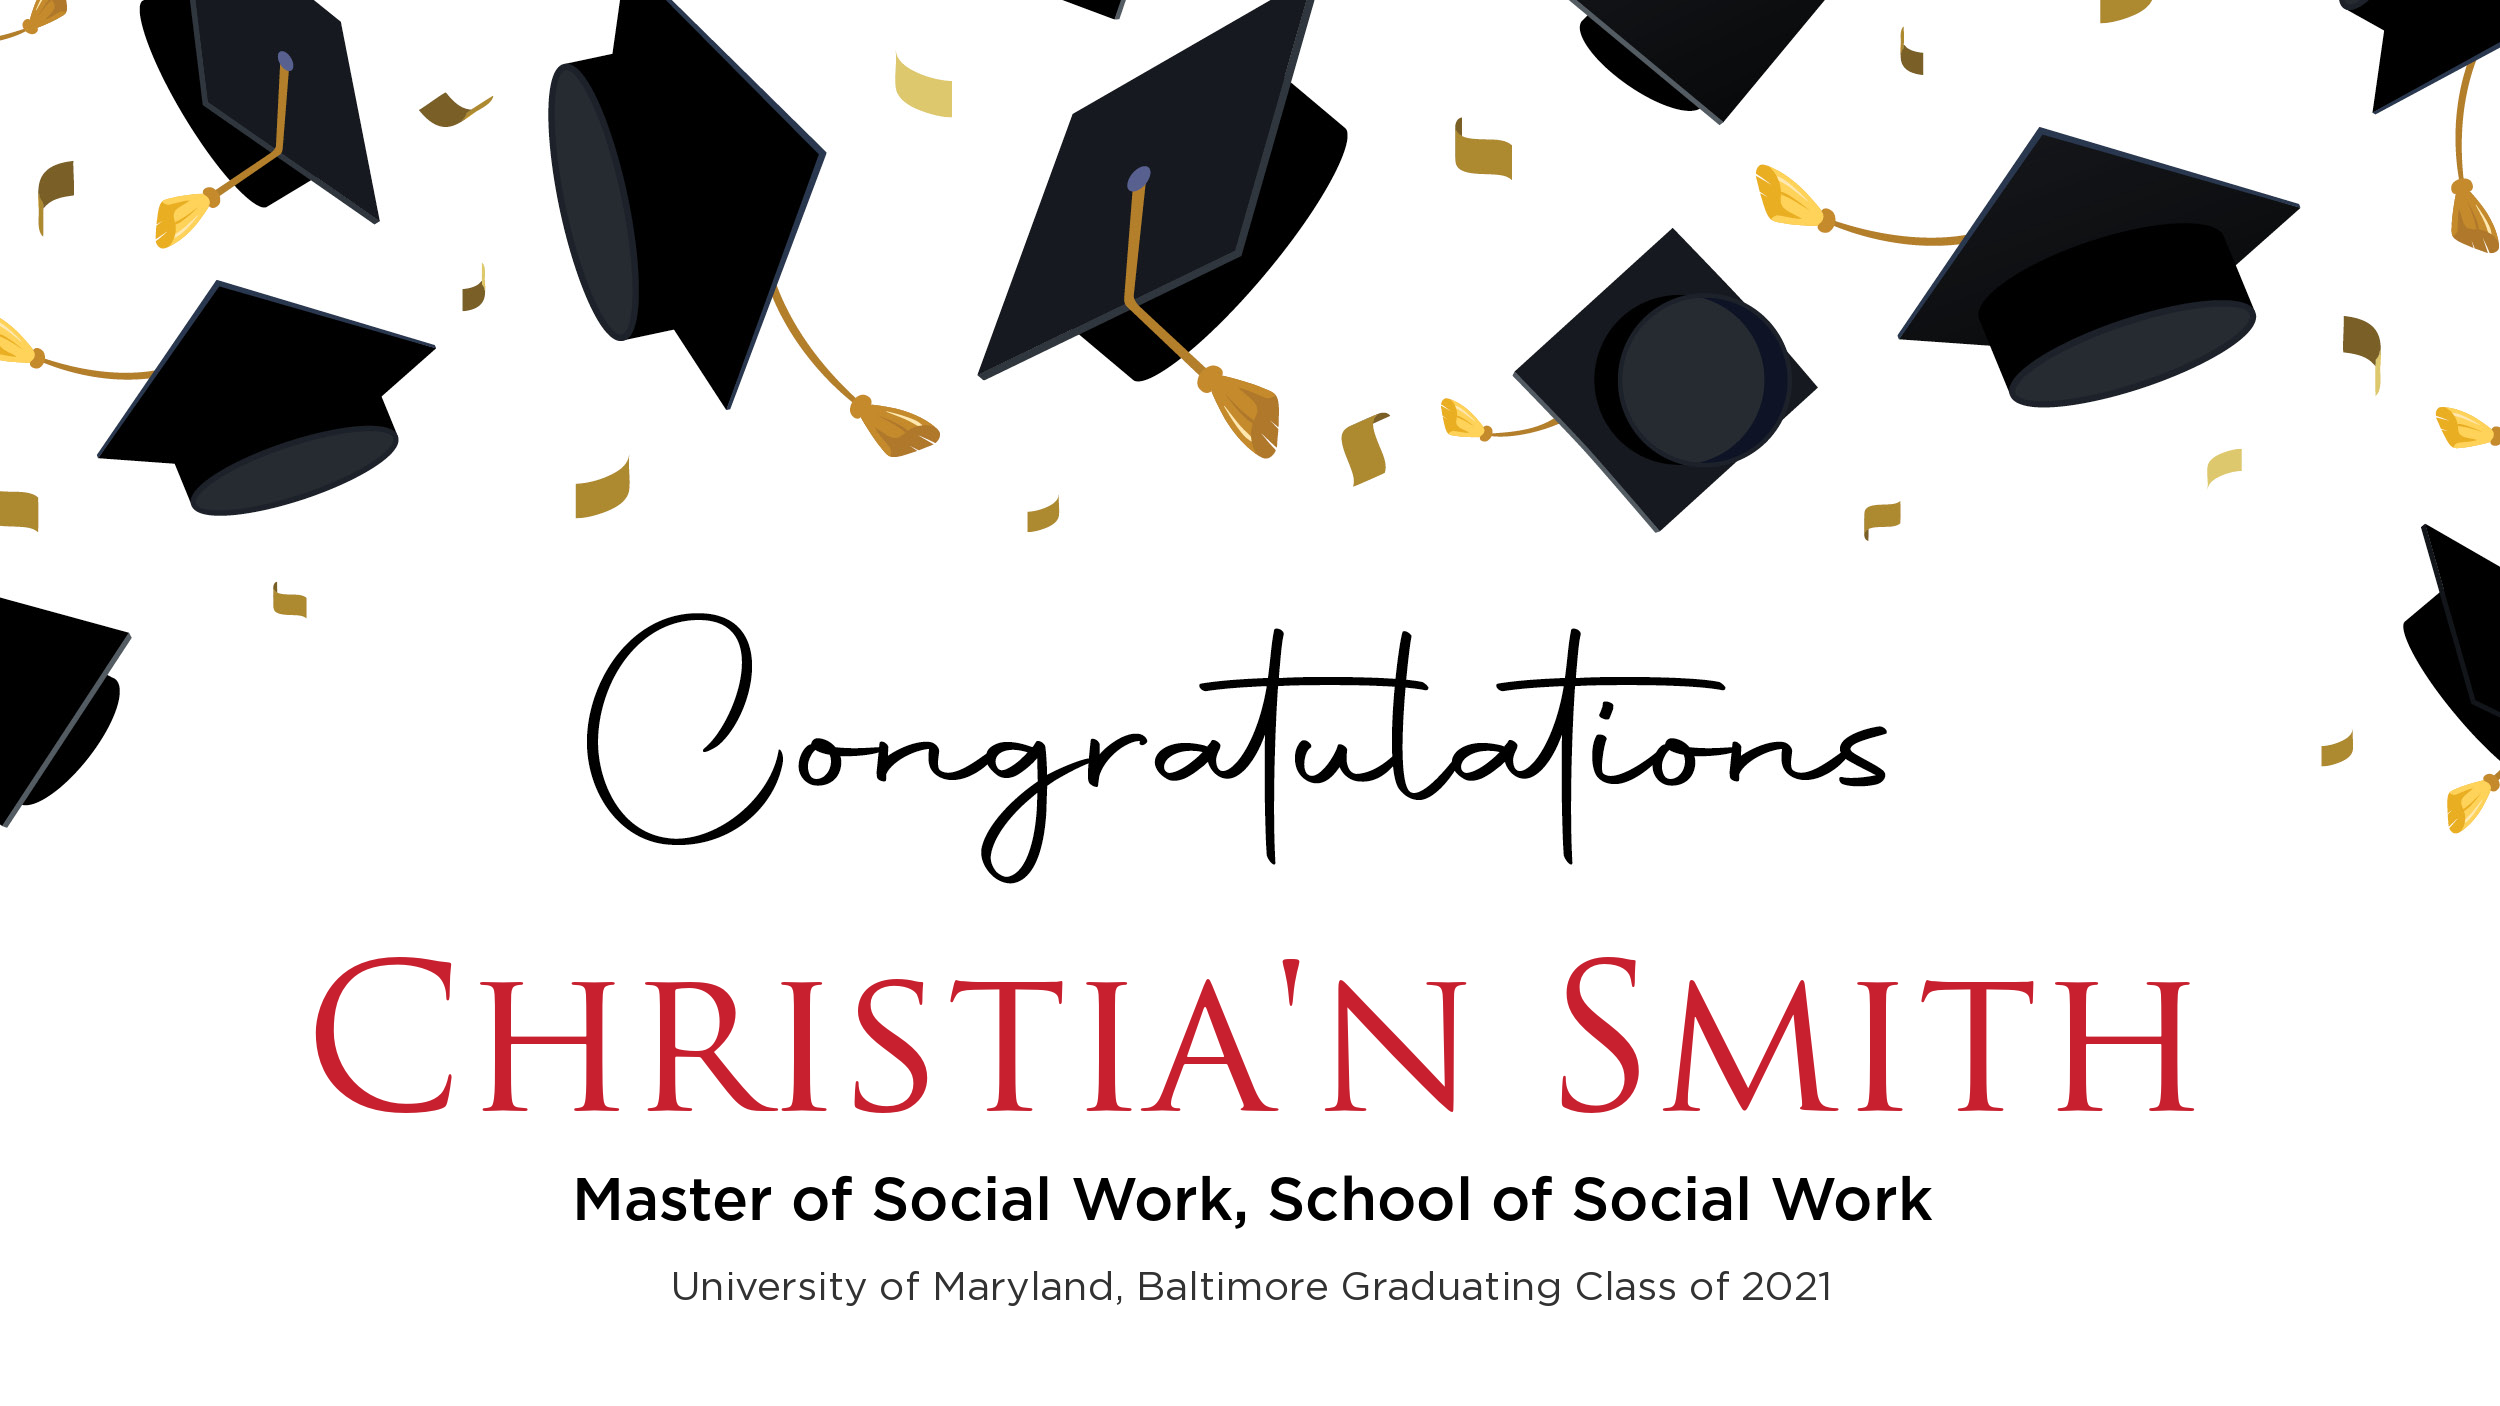 Congratulations Christia'n Smith, Master of Social Work